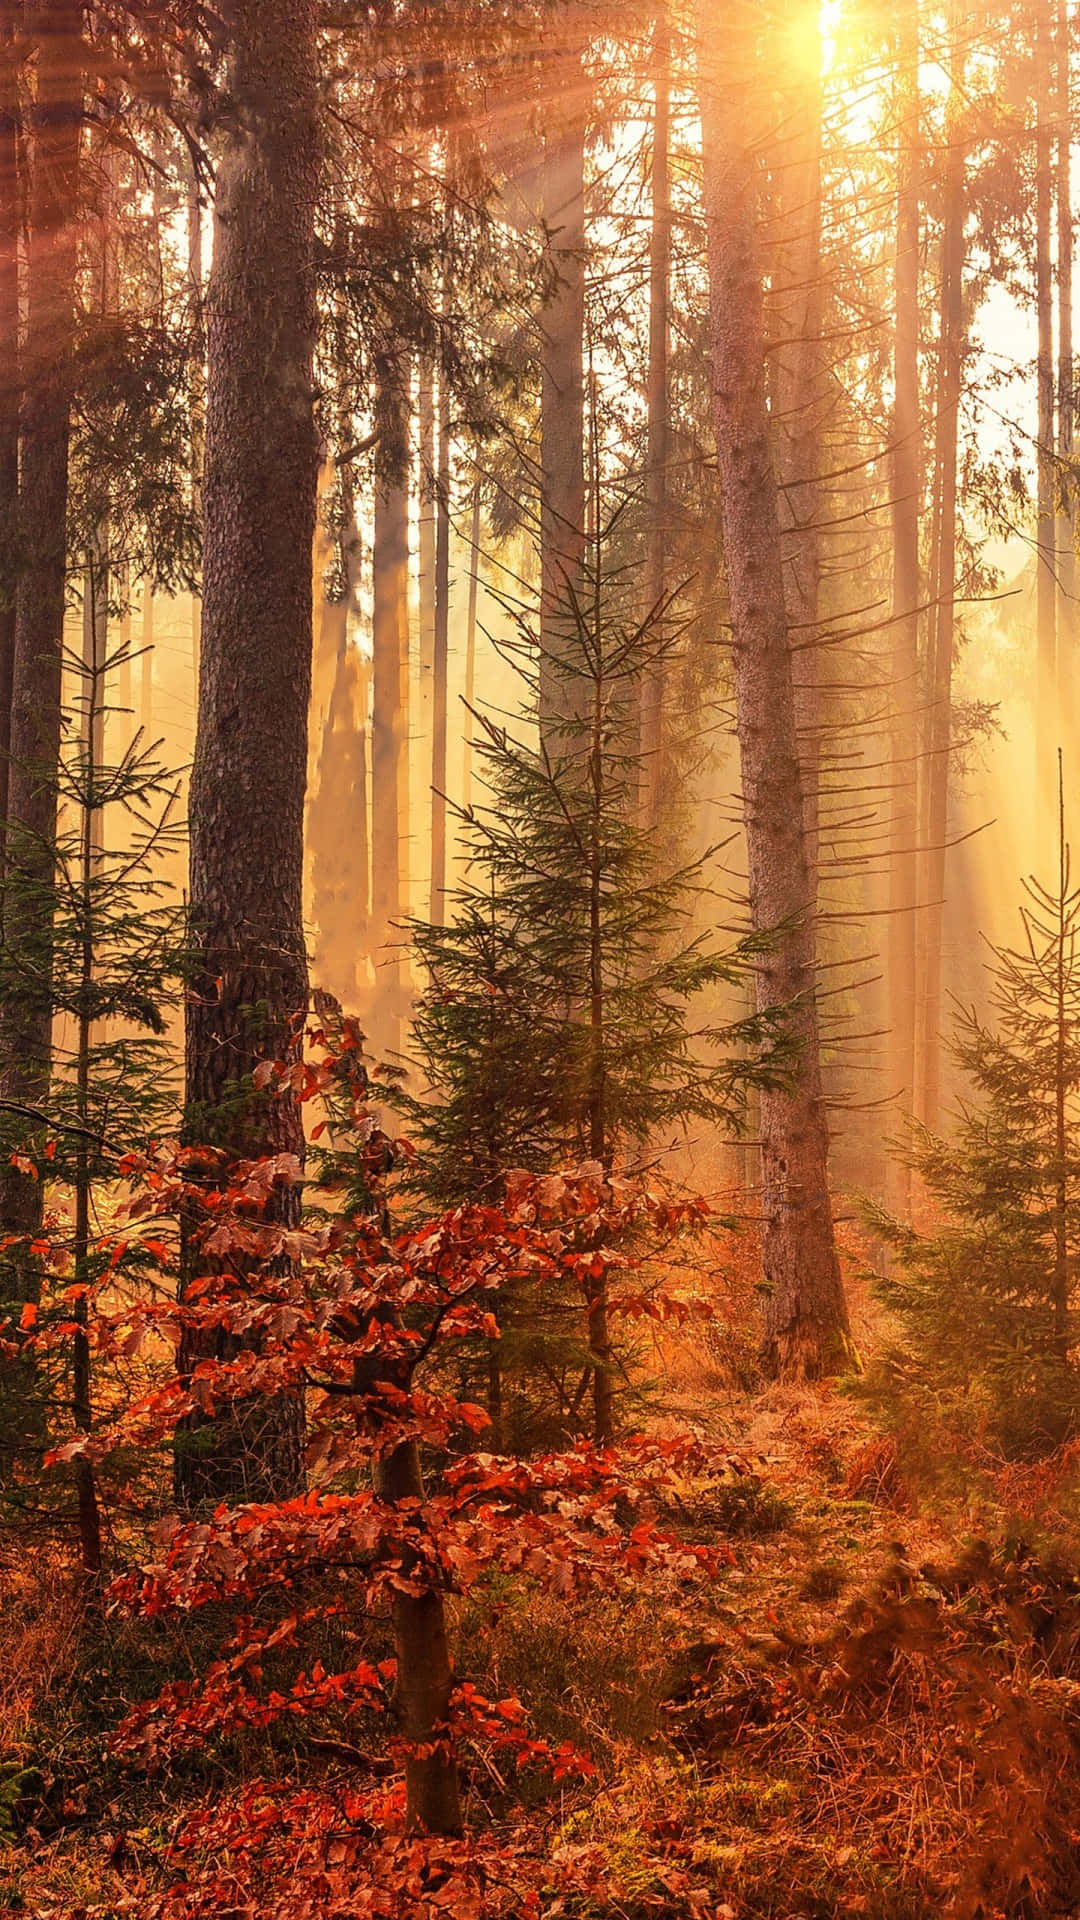 En smuk efterårsscene fanget med kraften fra en Iphone 6 Plus. Wallpaper